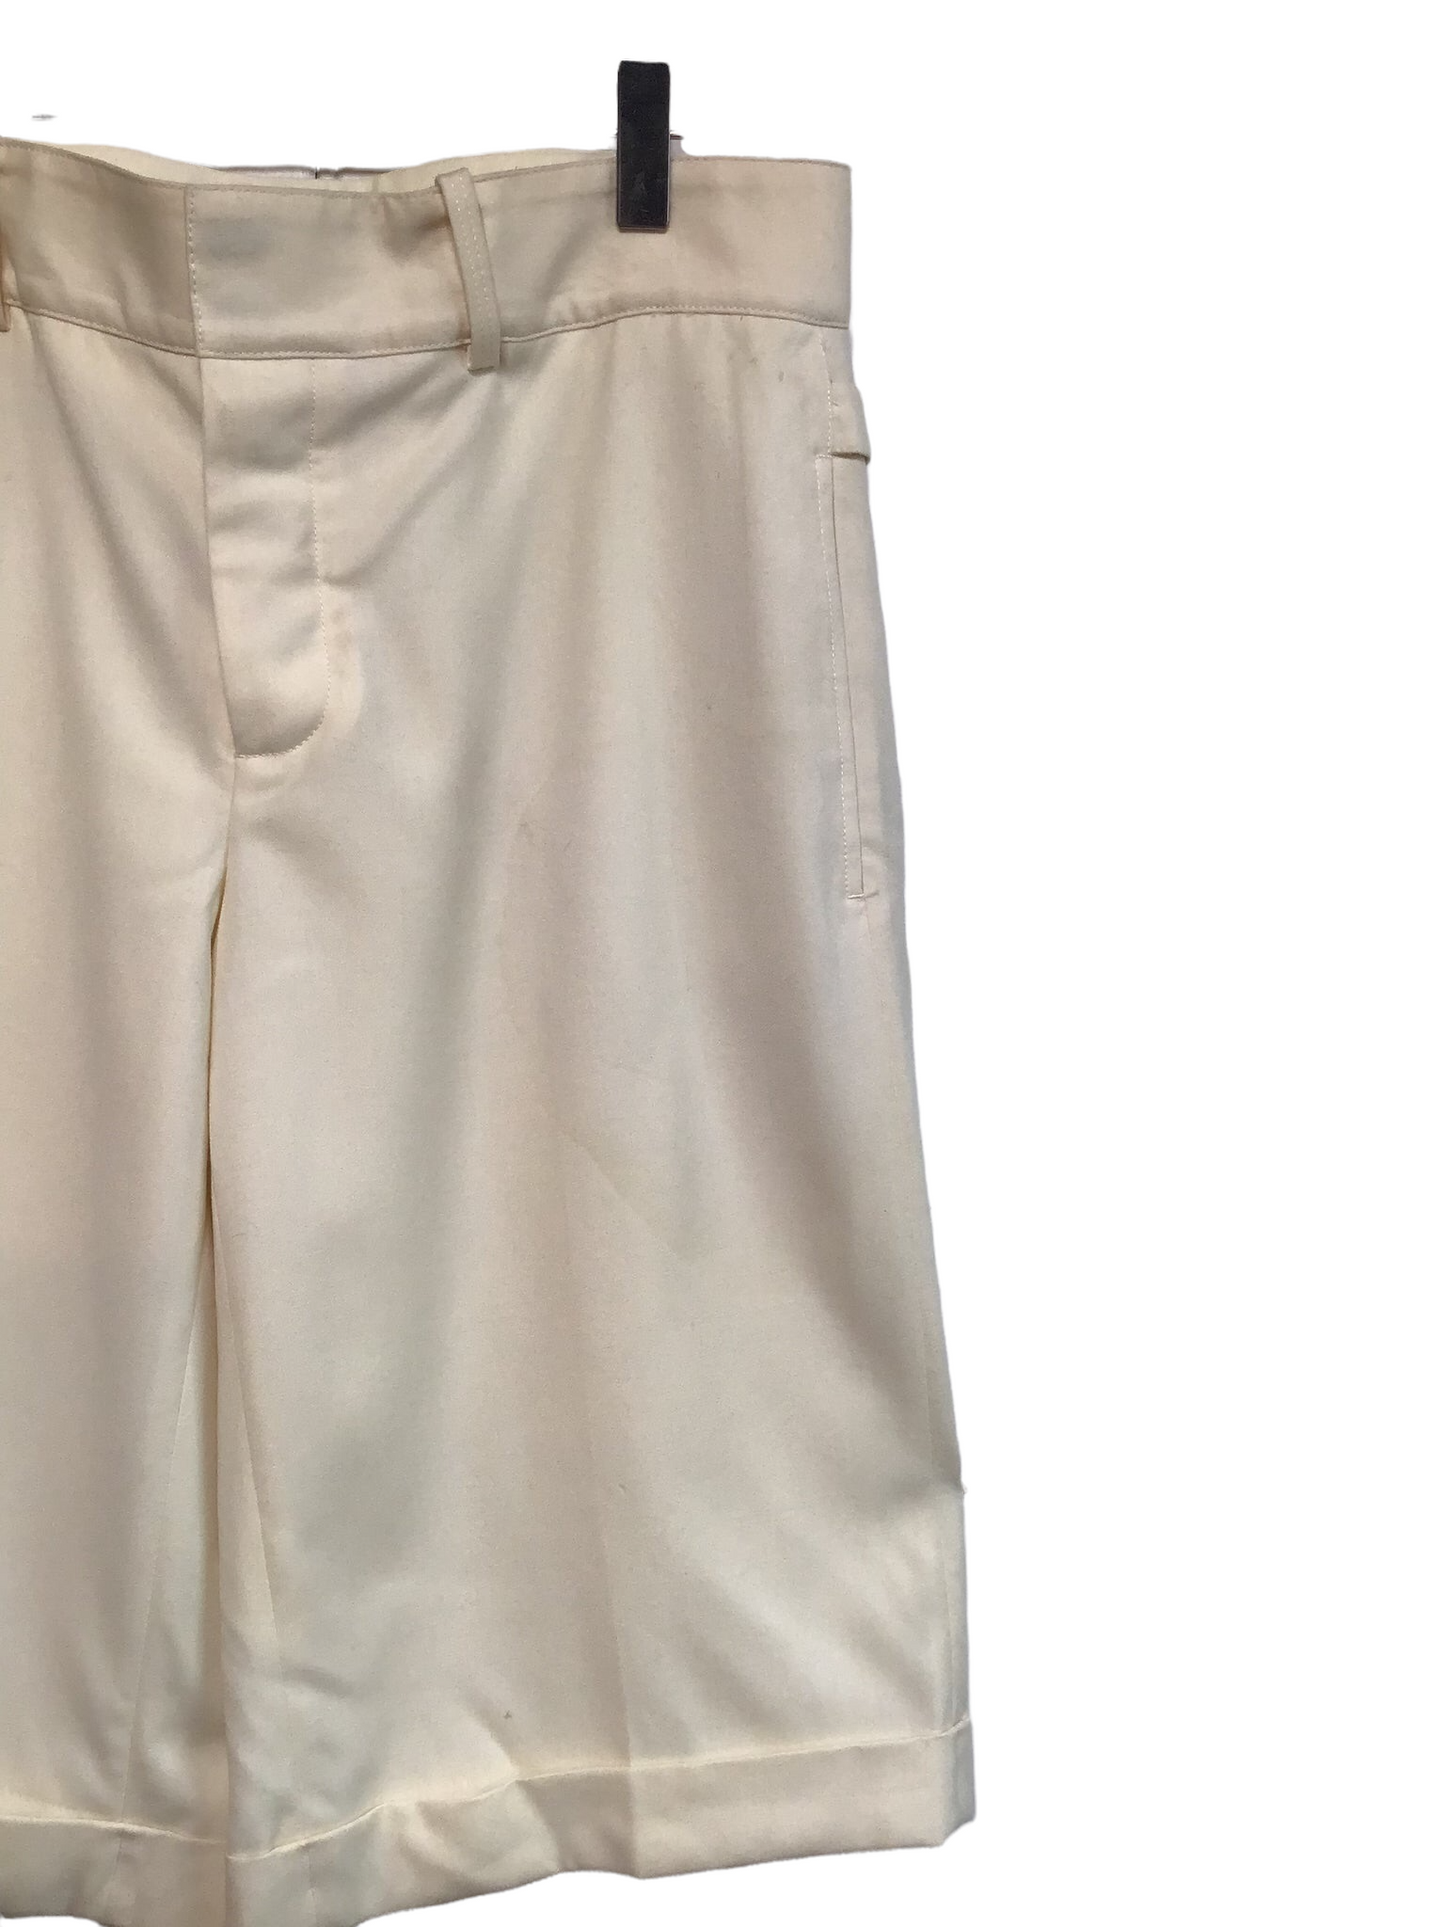 Ralph Lauren Cream Shorts (Size M/L)